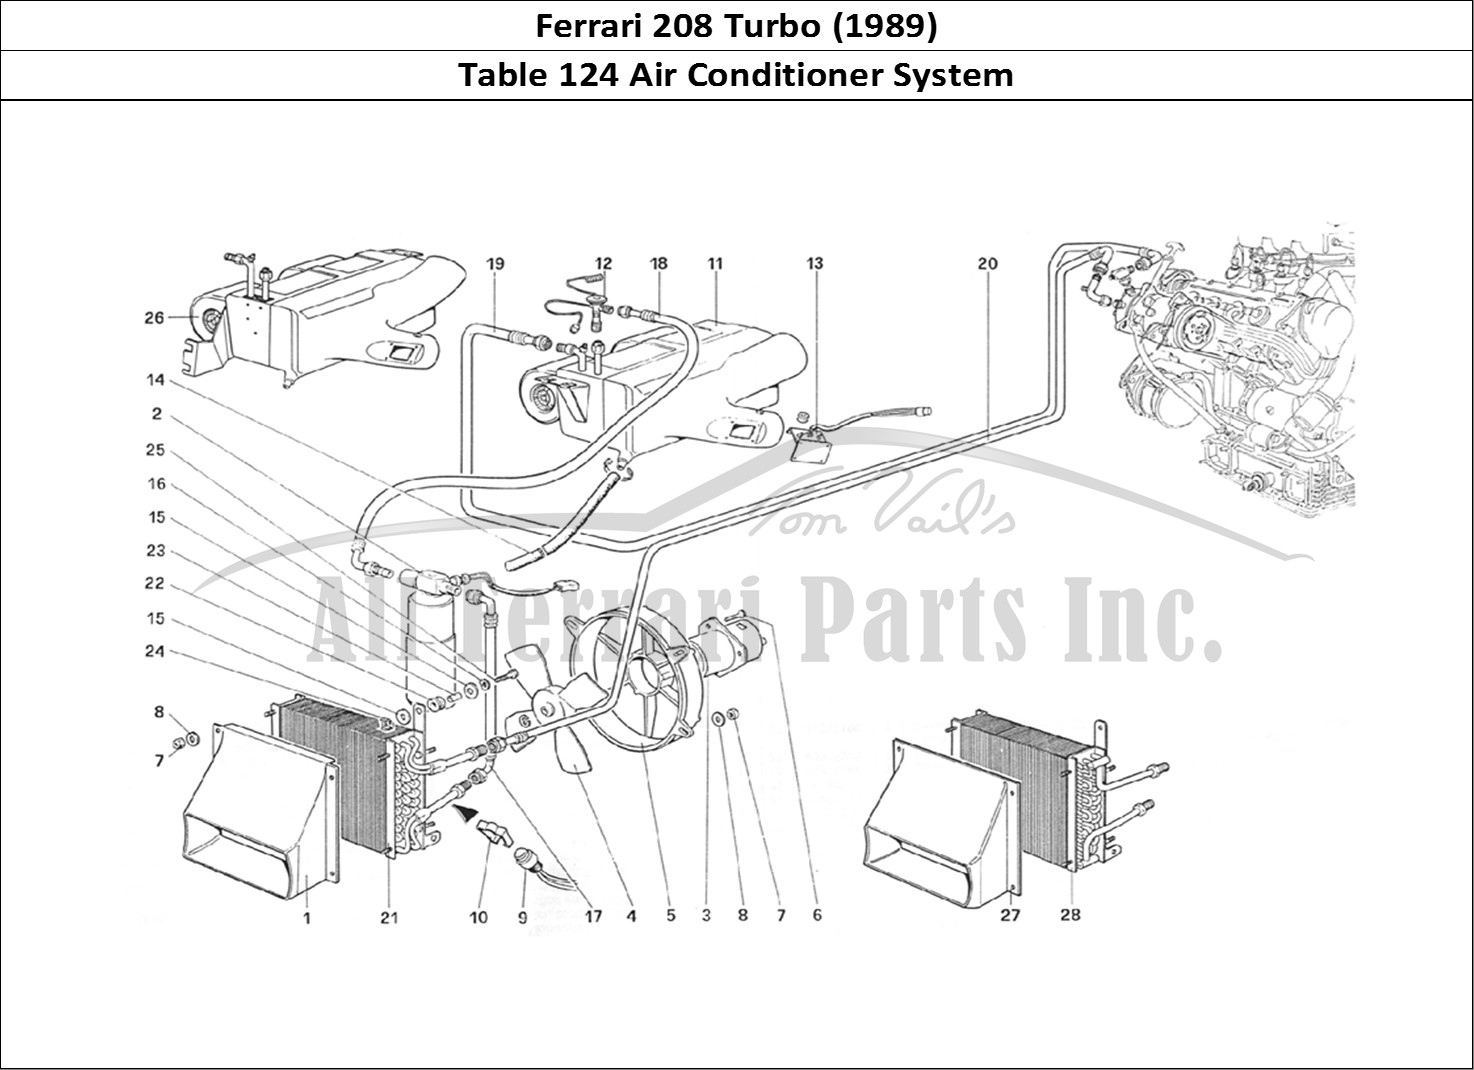 Ferrari Parts Ferrari 208 Turbo (1989) Page 124 Air Conditioning System